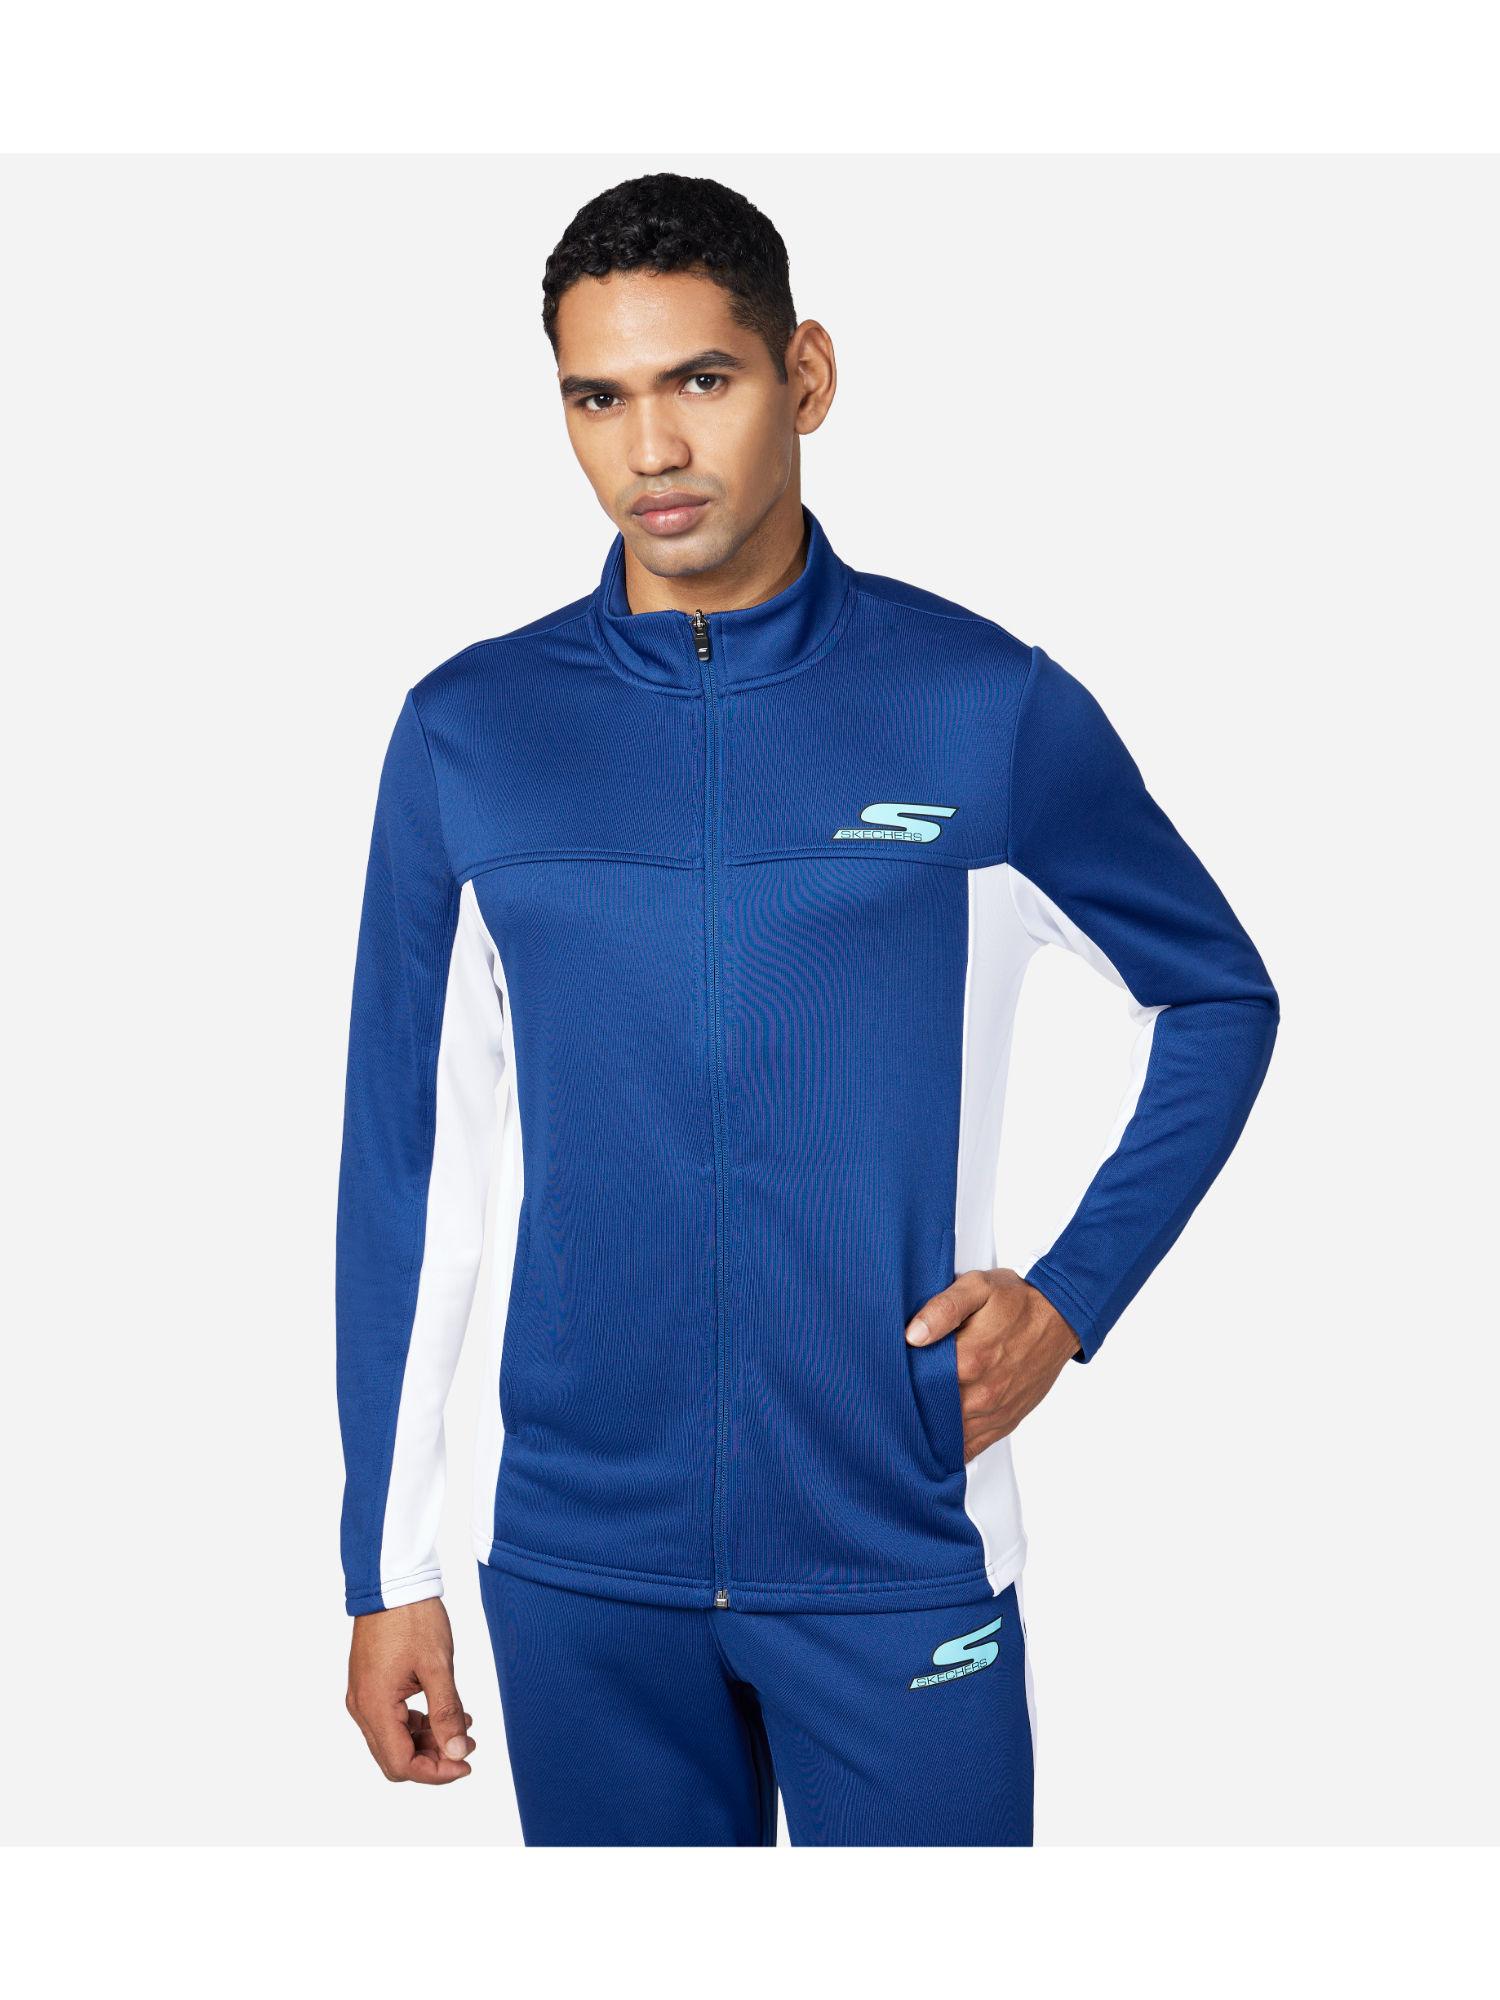 gorun tech track jacket blue